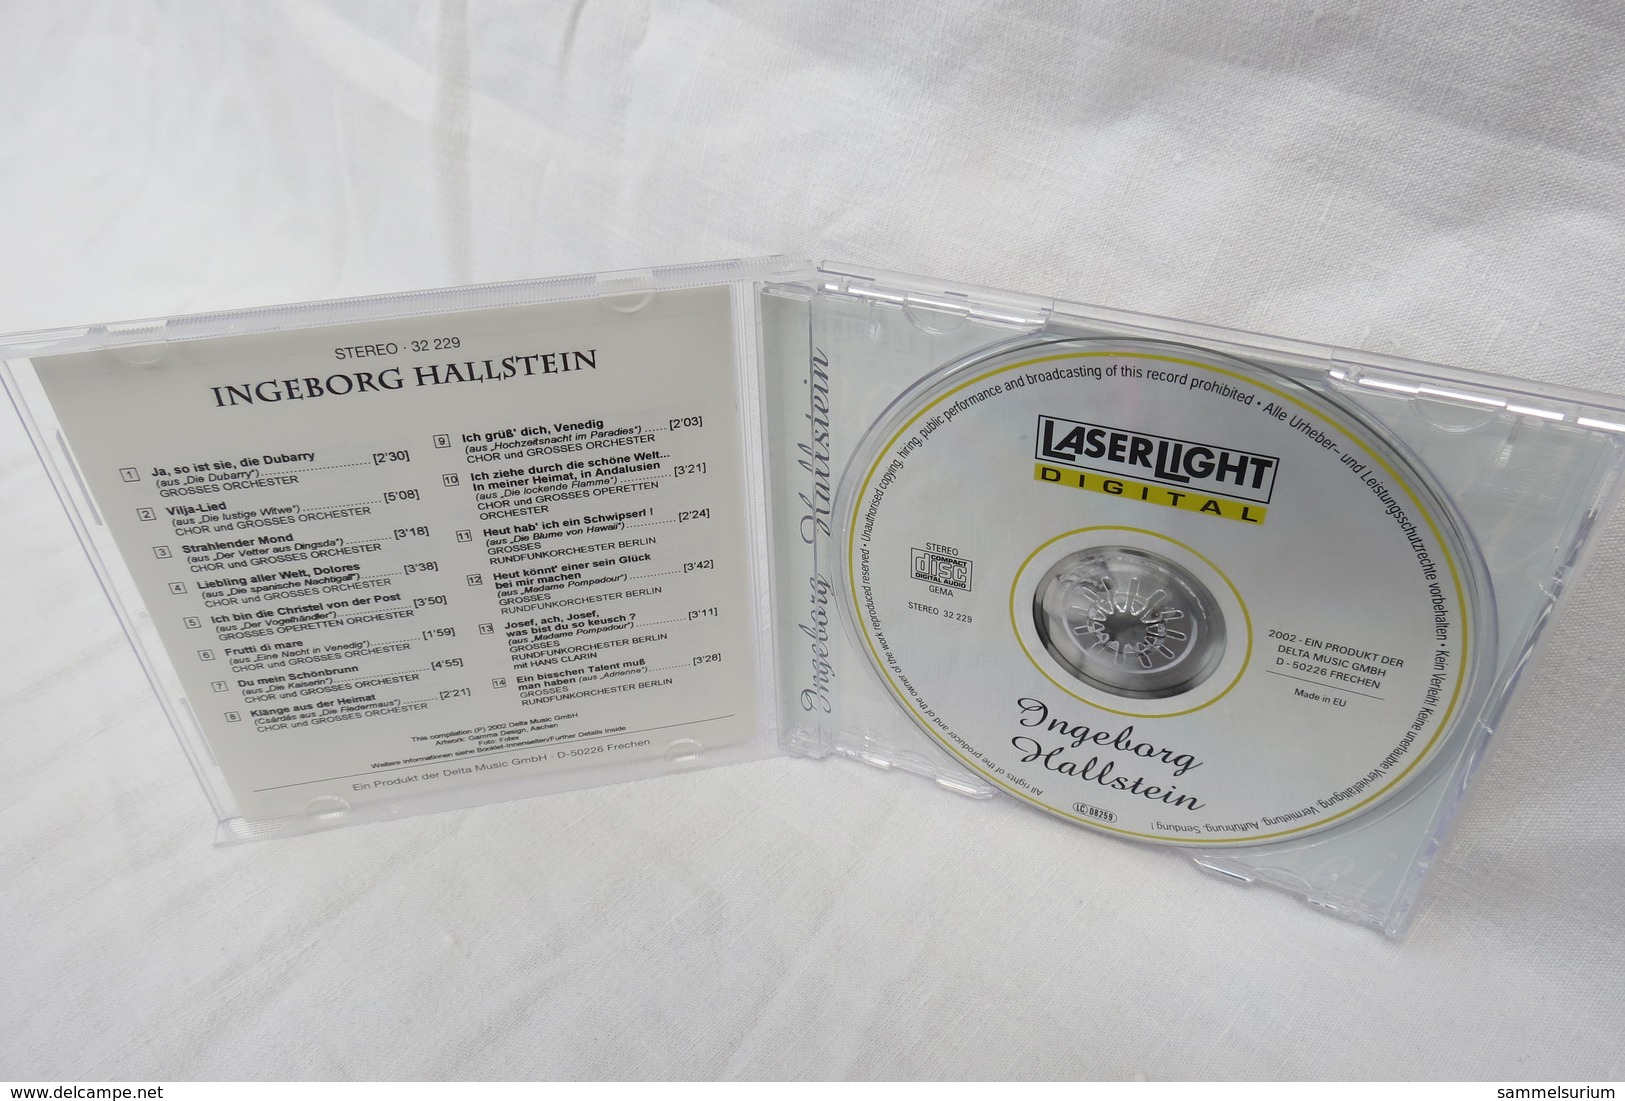 2 CD-Set "Ingeborg Hallstein"